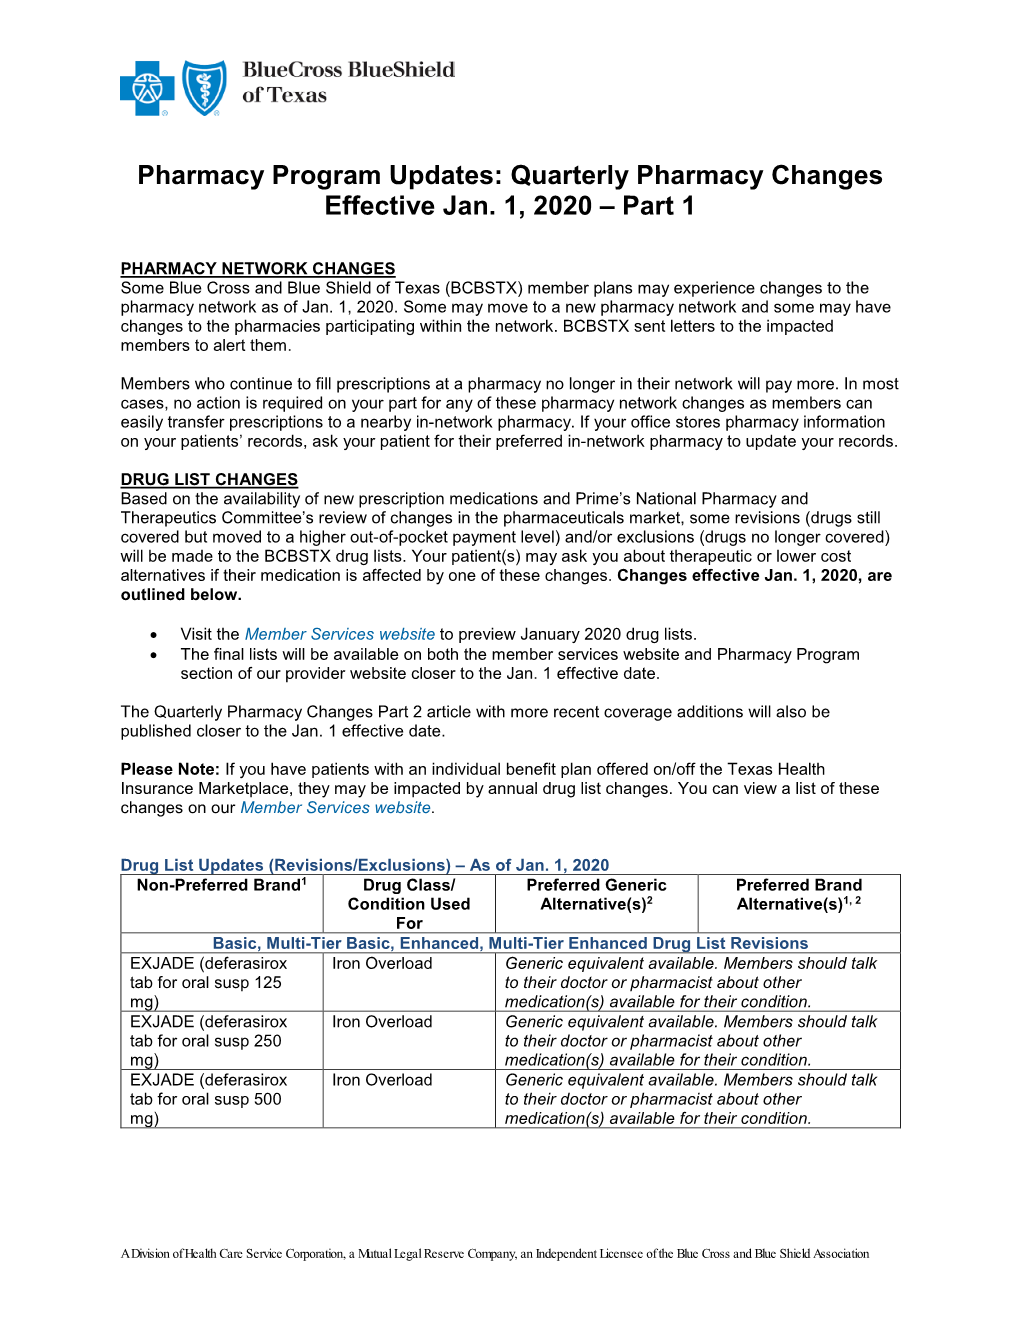 Quarterly Pharmacy Changes Effective Jan. 1, 2020 – Part 1